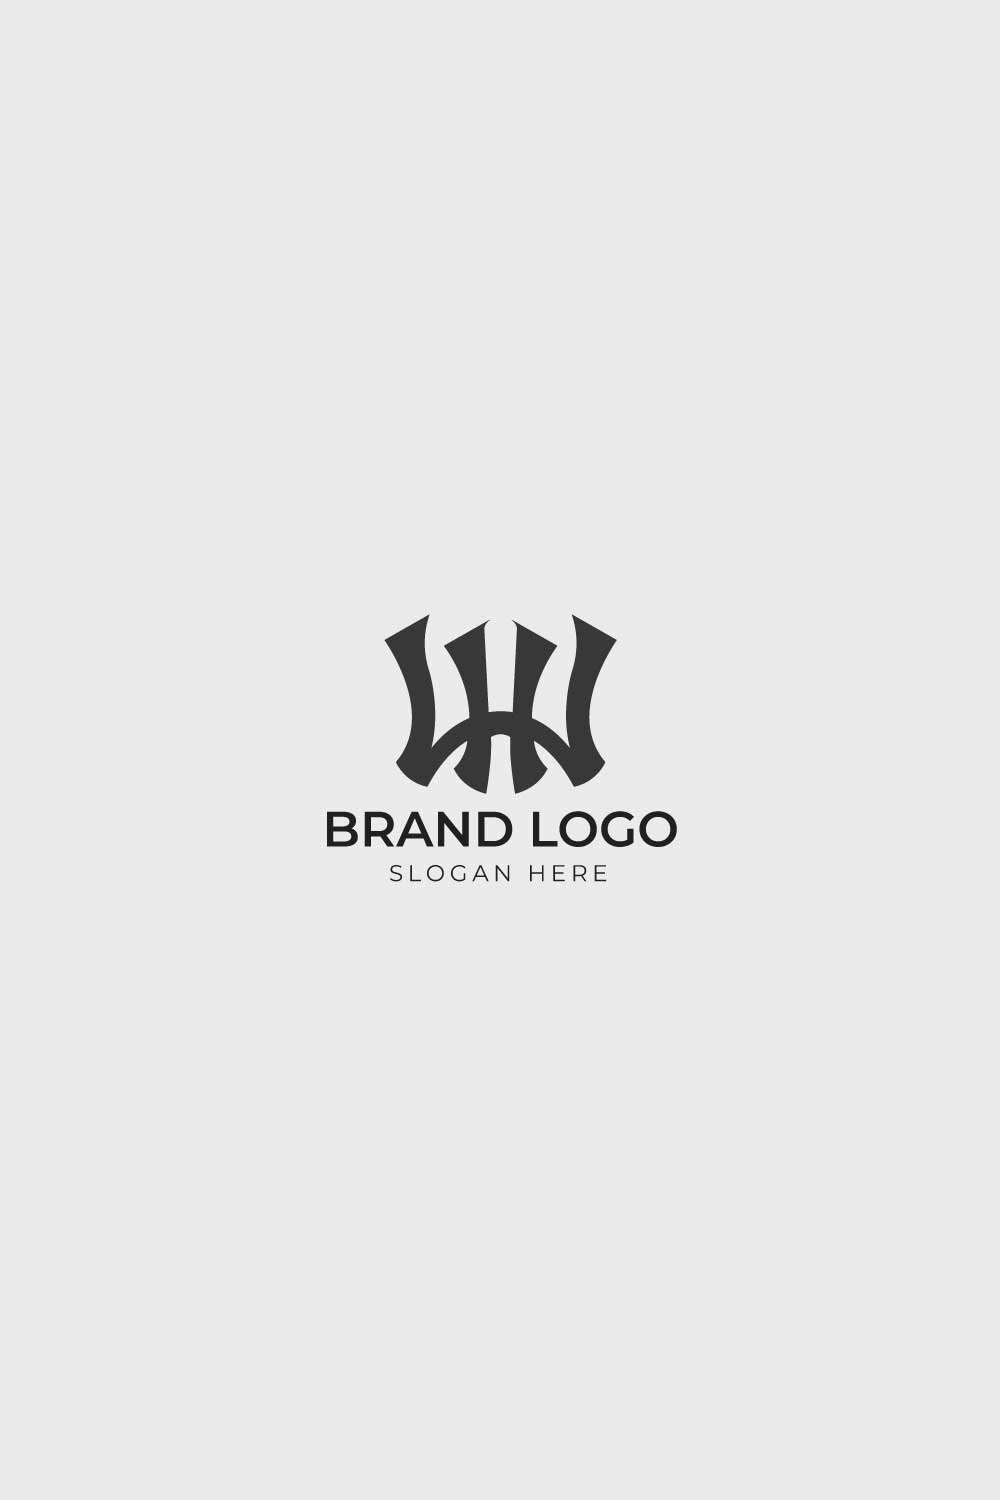 brand logo pint 696